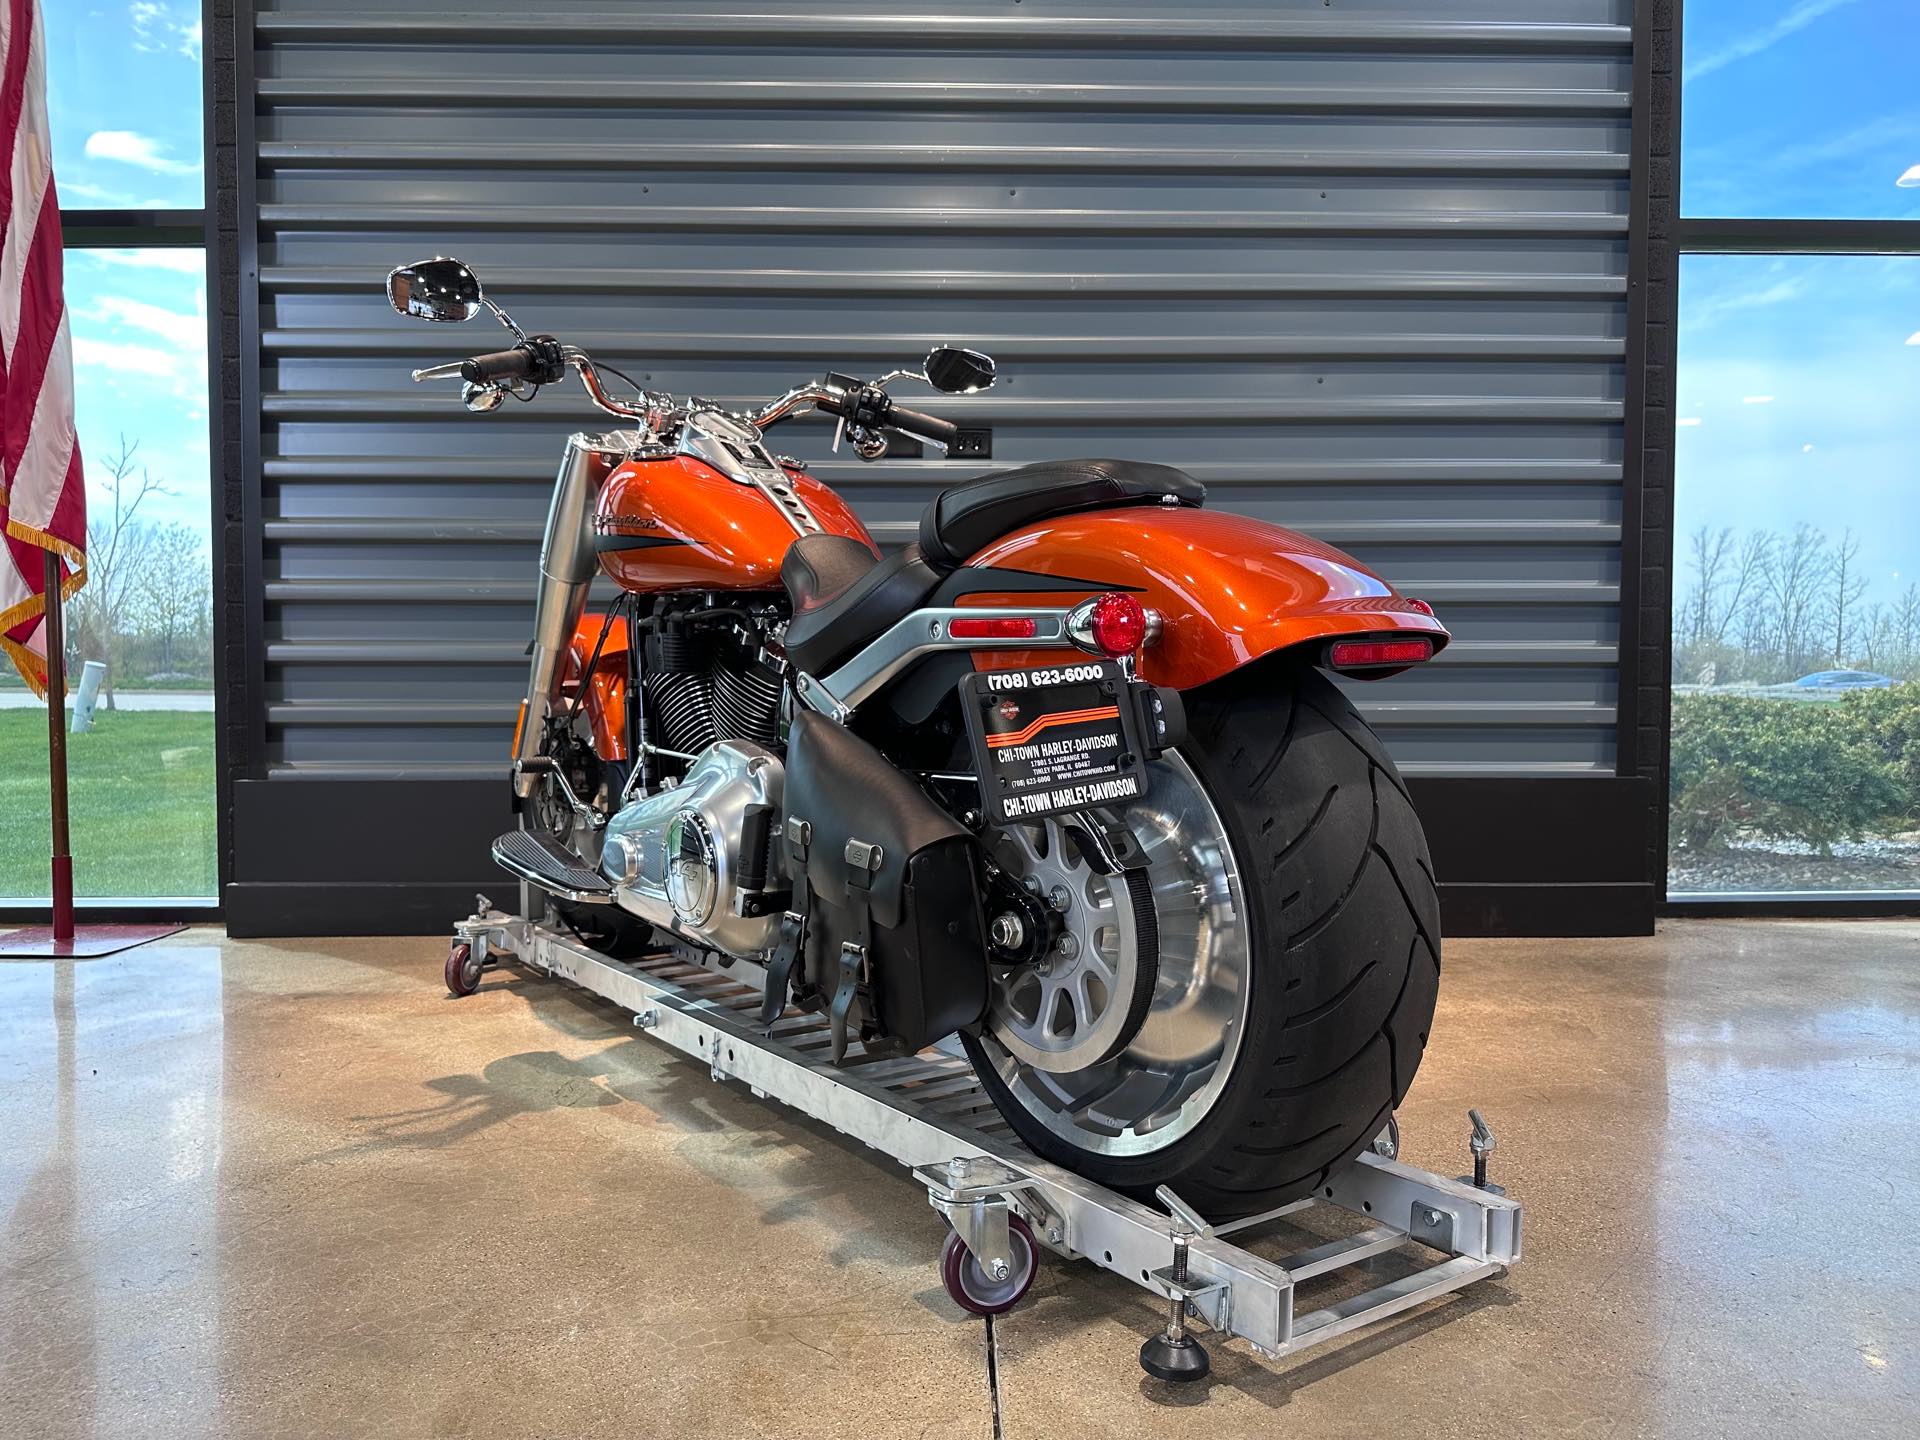 2019 Harley-Davidson Softail Fat Boy 114 at Chi-Town Harley-Davidson